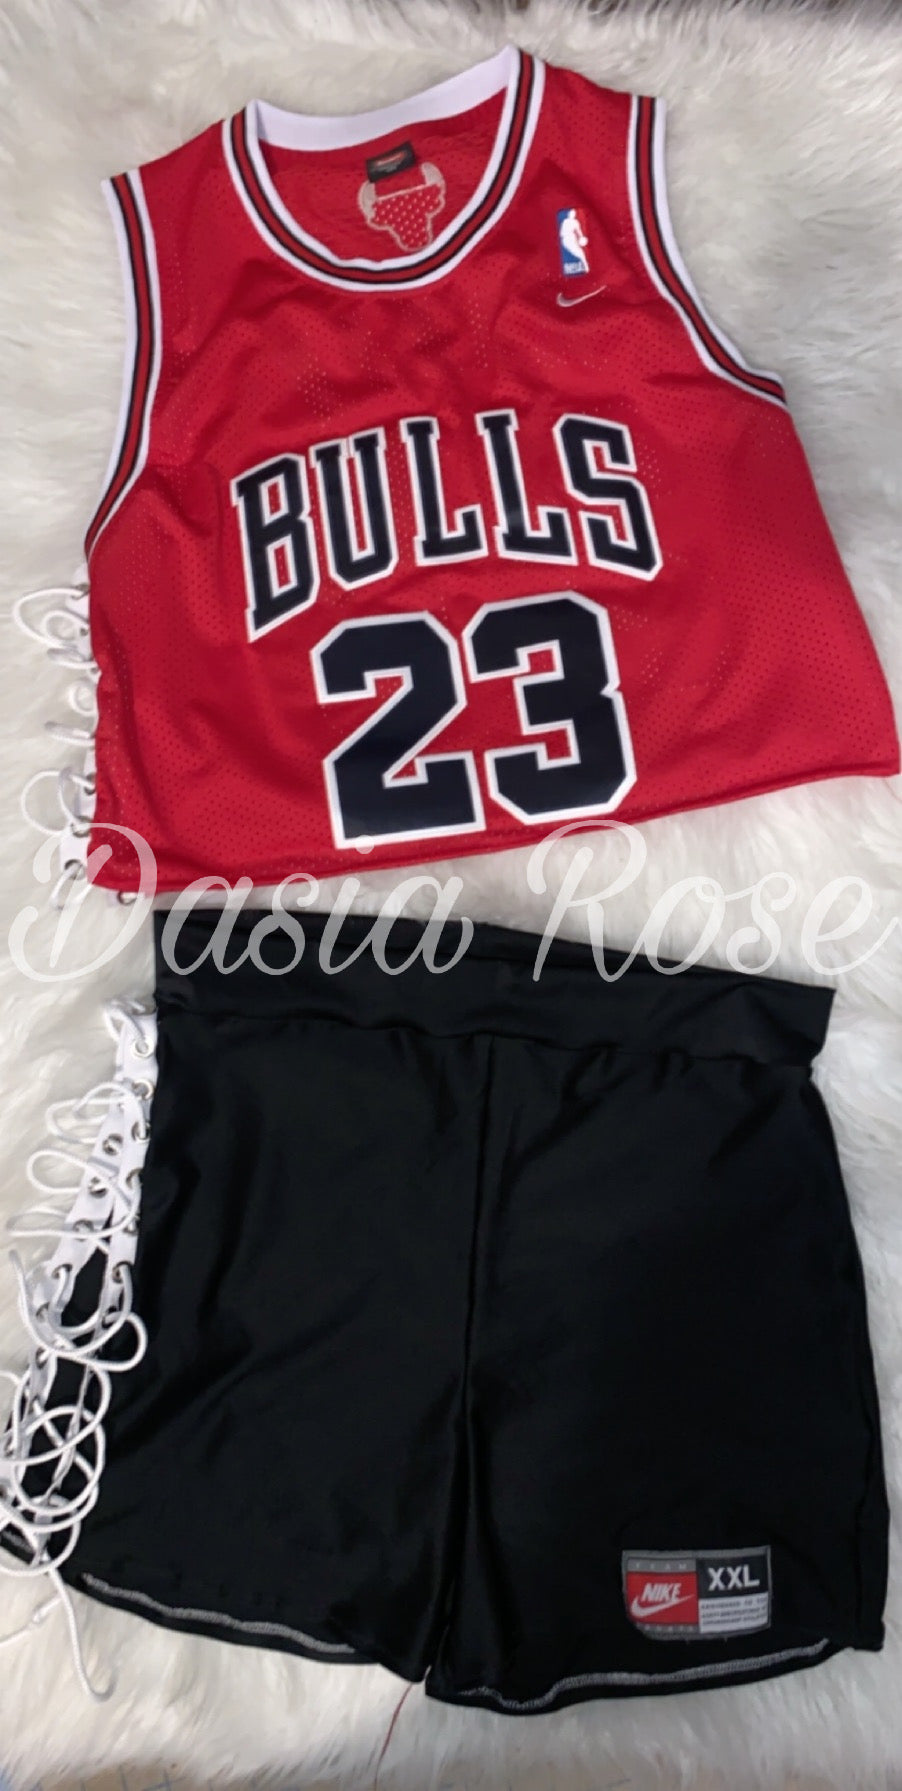 Bulls jersey set